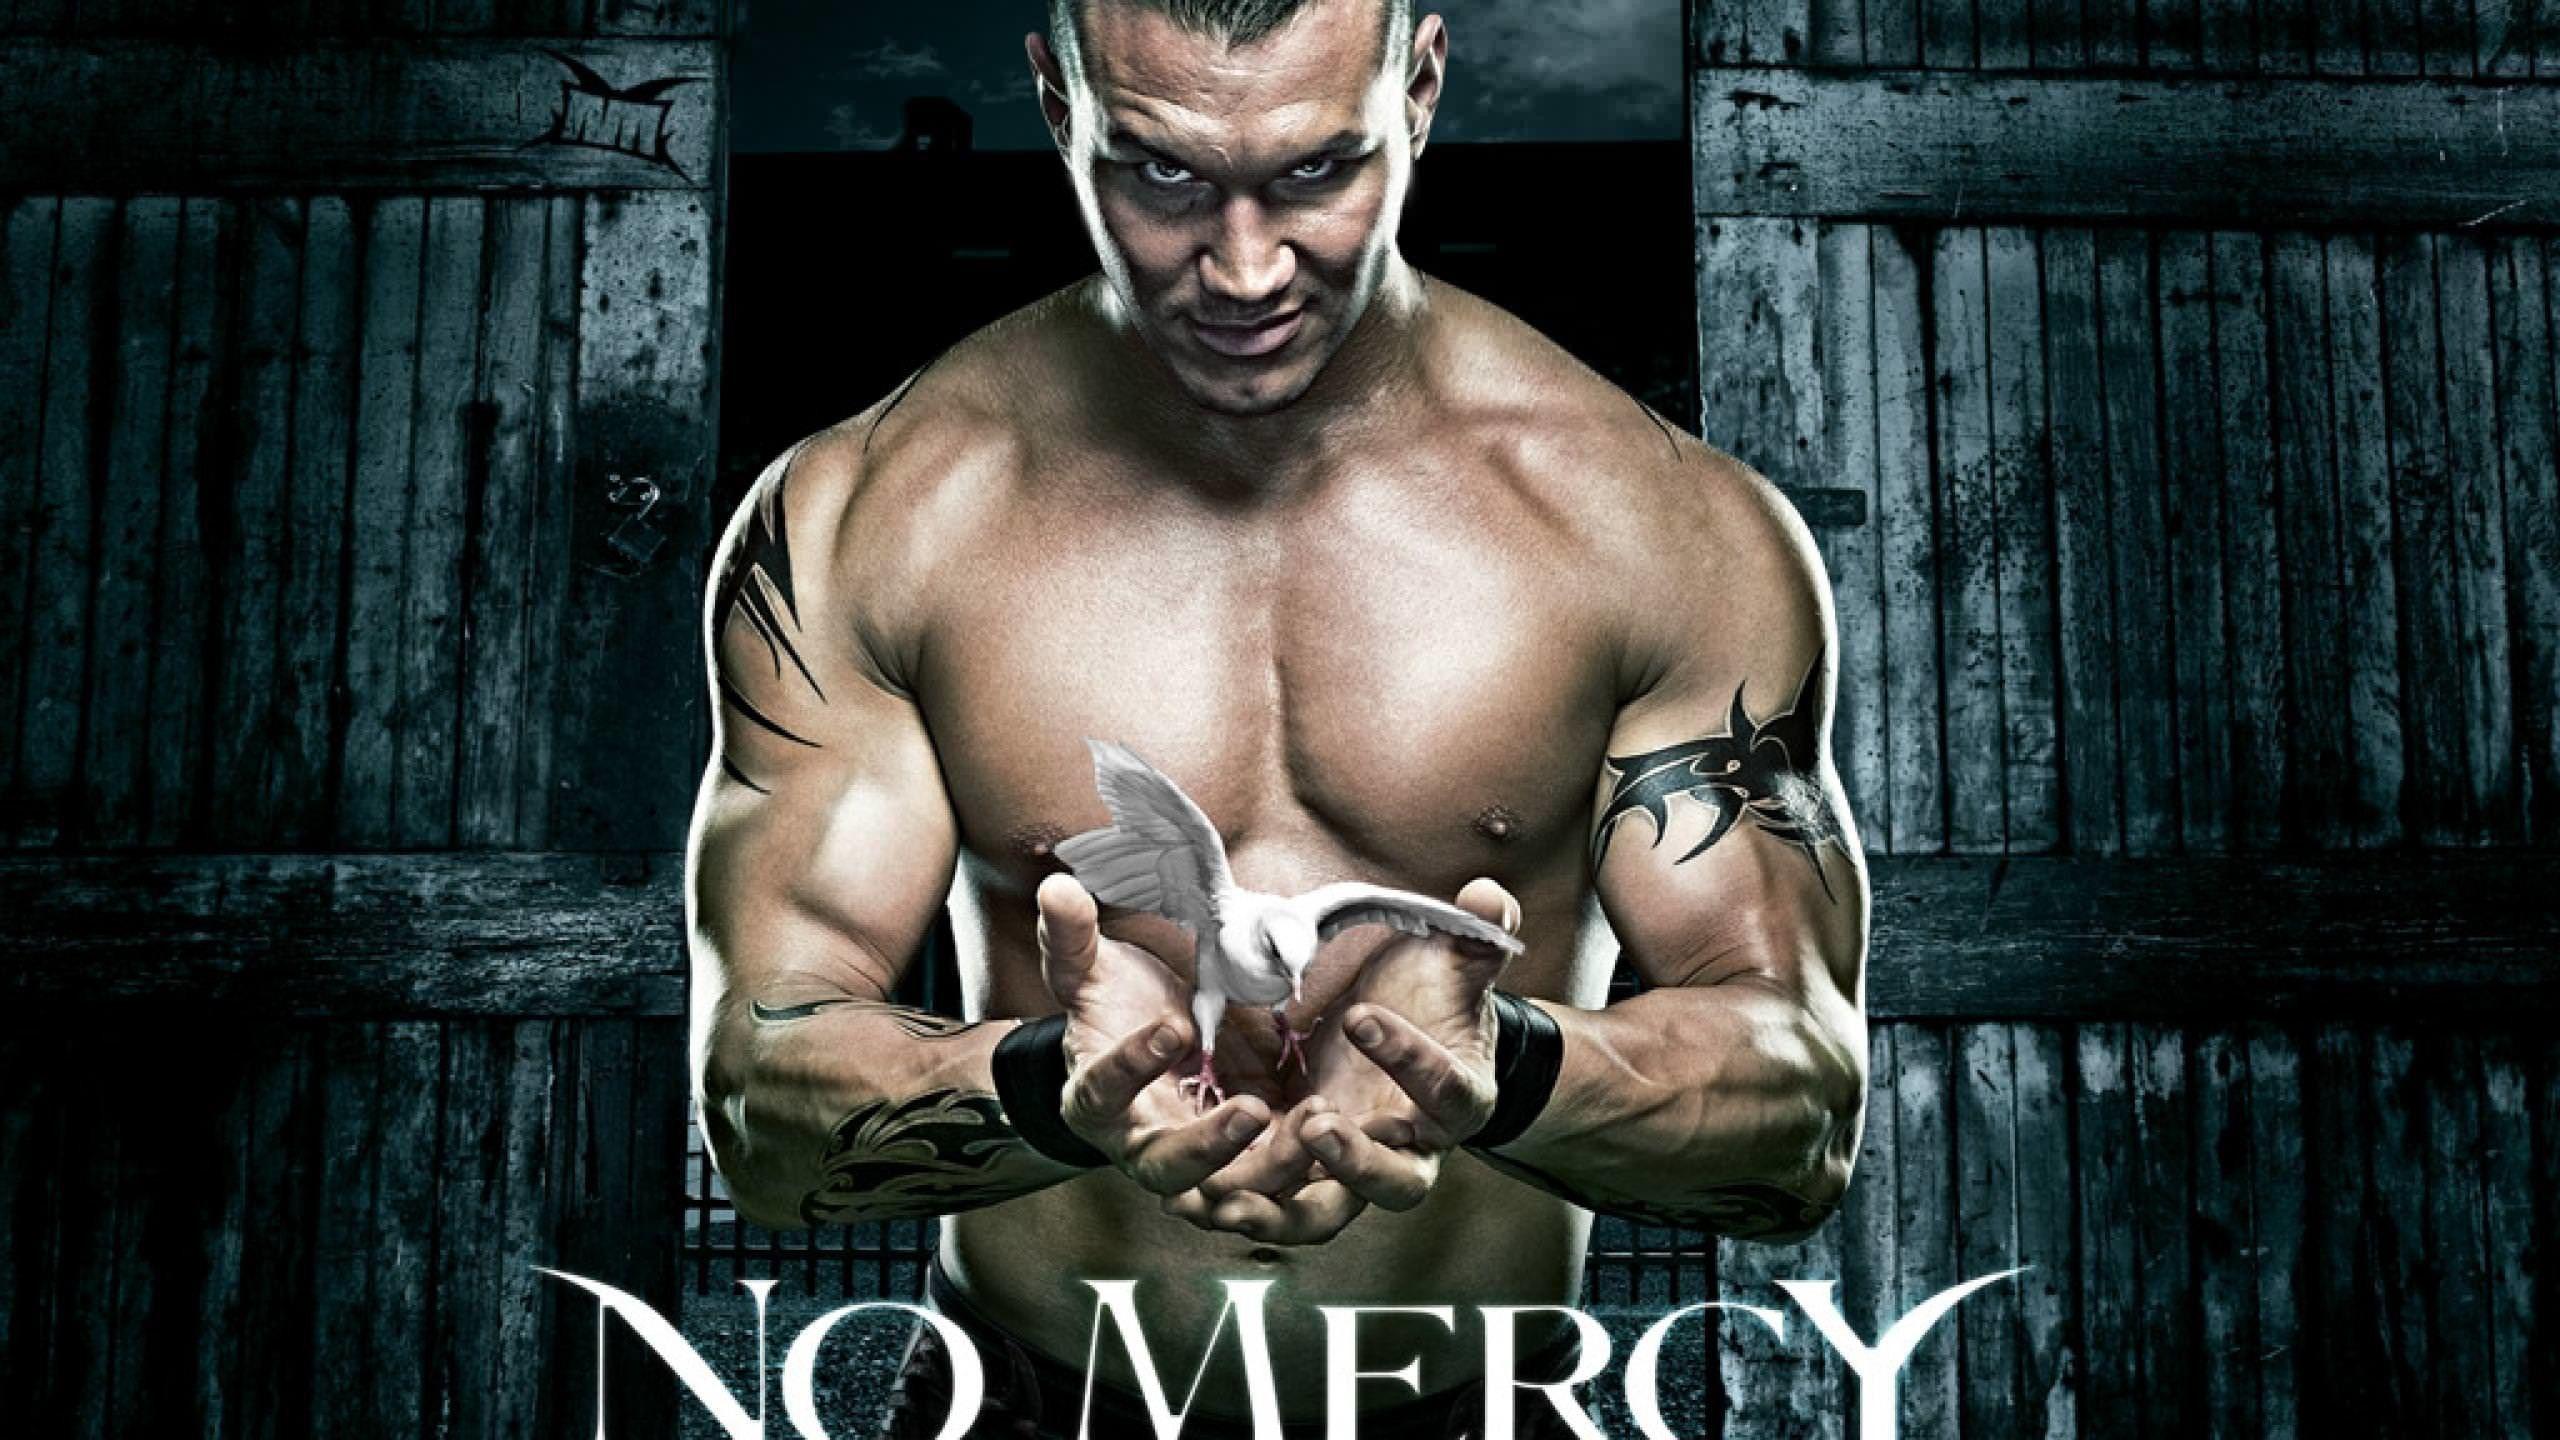 WWE Randy Orton HD Wallpaper and Image Download Free